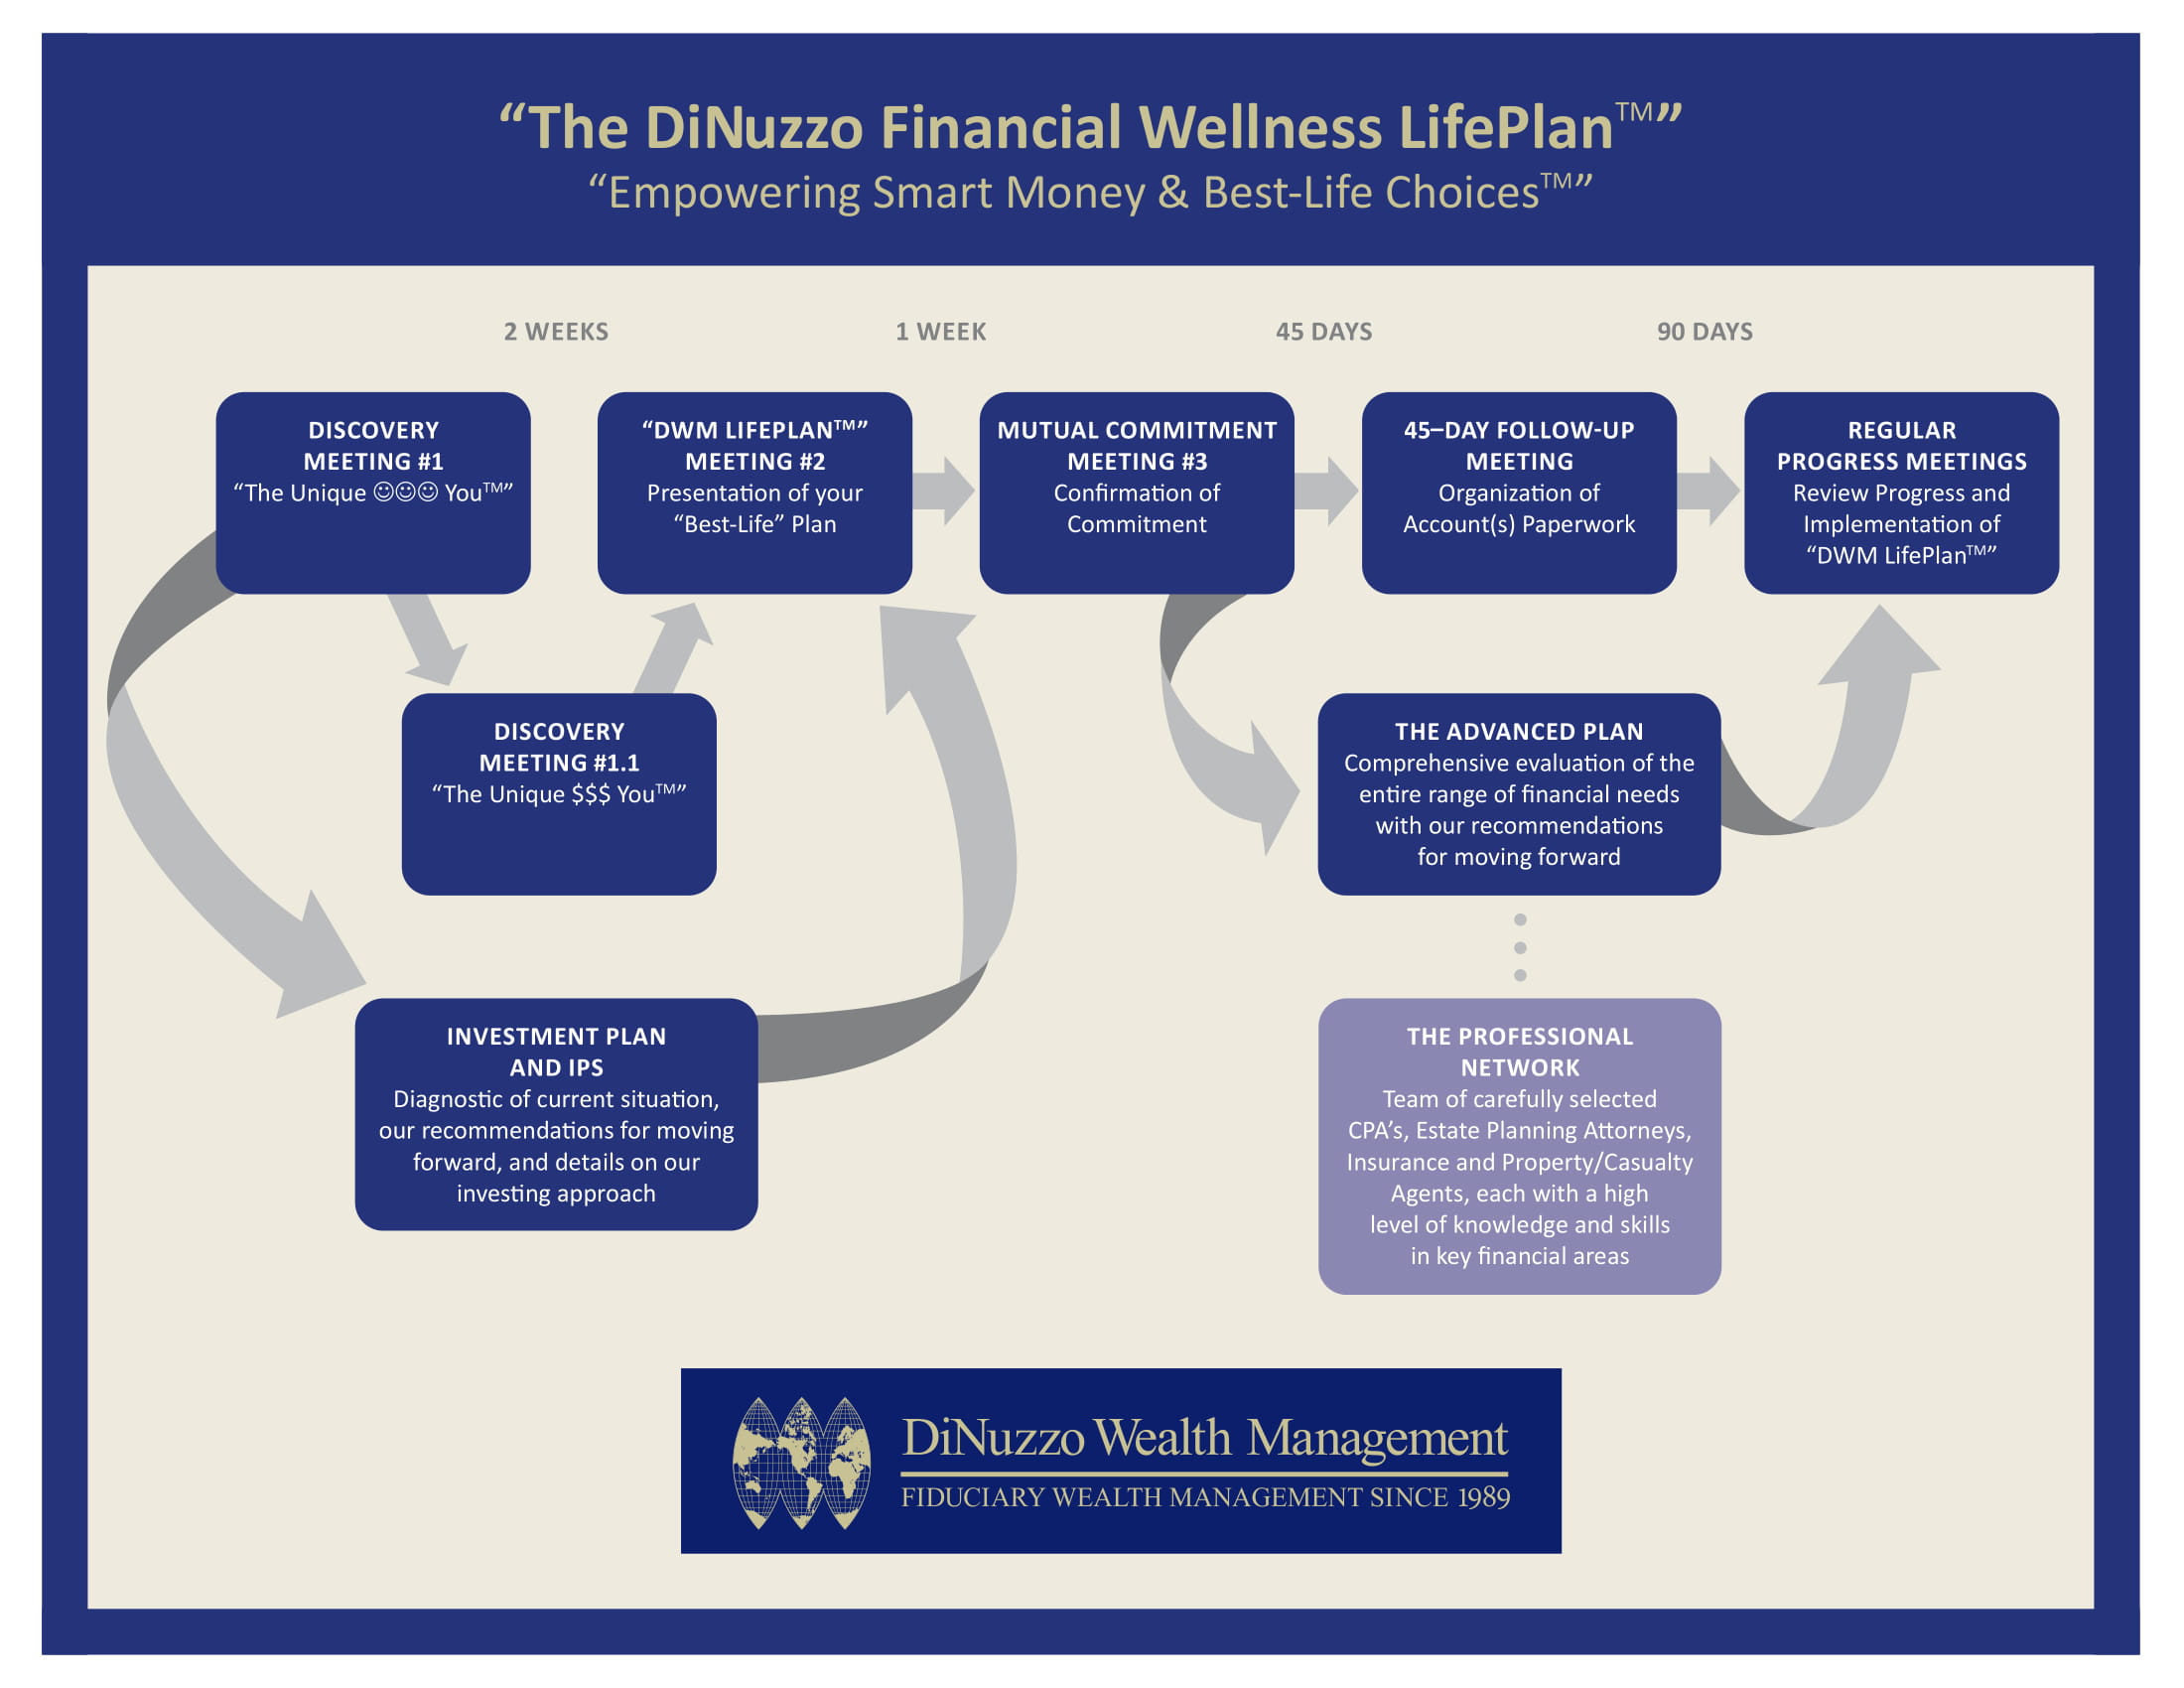 The Financial Wellness LifePlan | DiNuzzo Wealth Management